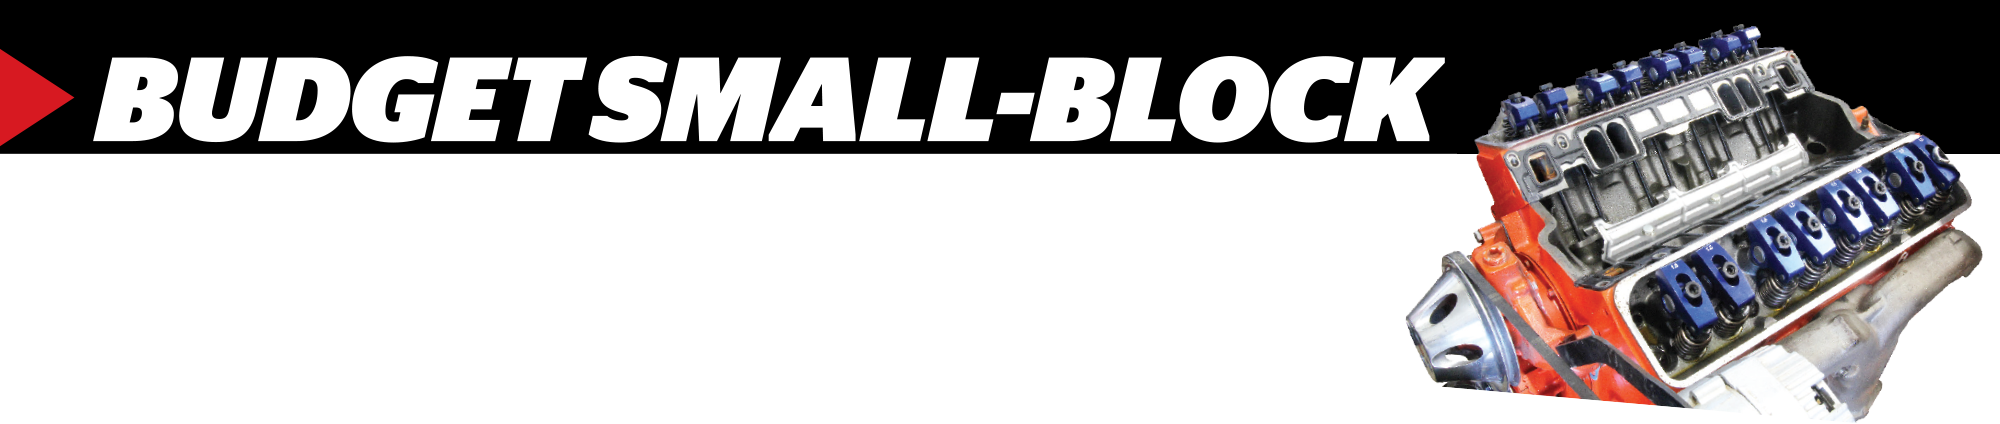 Budget Small-Block: Hydraulic Roller Cam Conversion